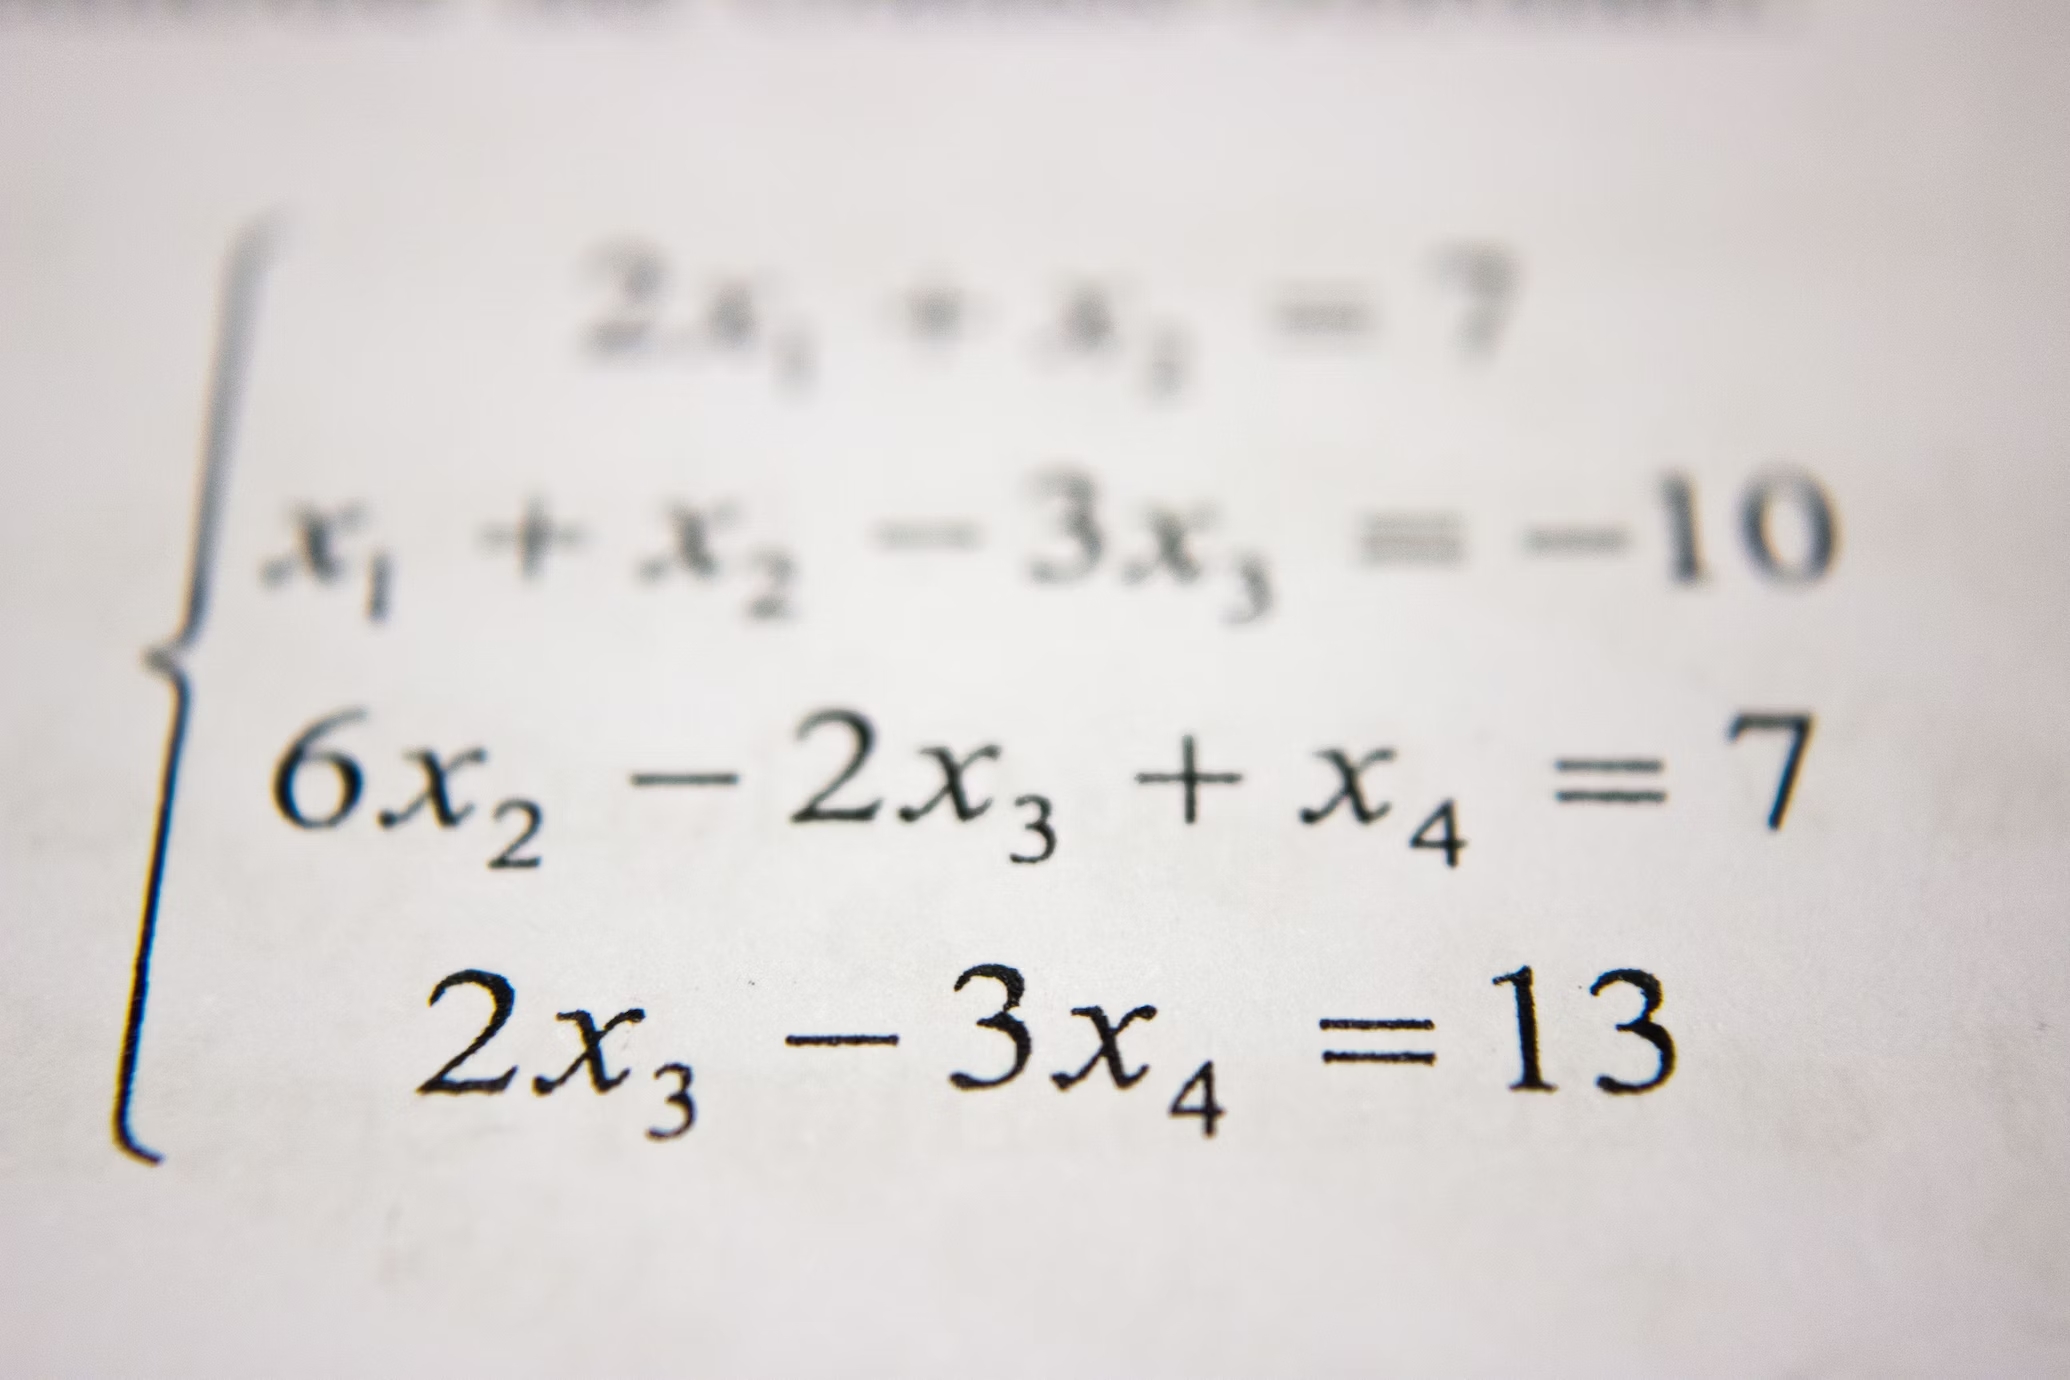 Math problems on white background involving X's